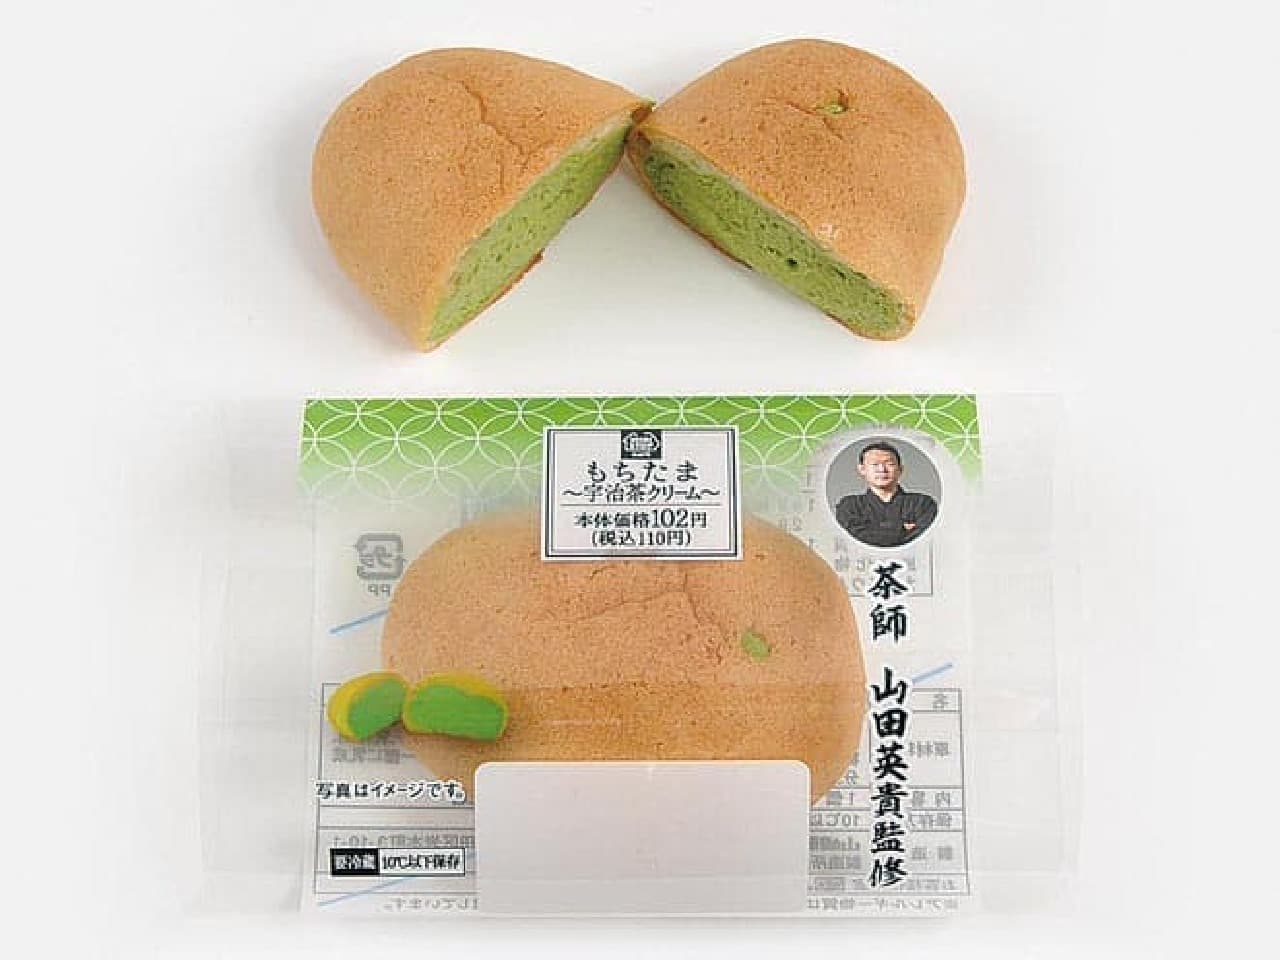 Ministop "Mochitama-Uji Tea Cream-"